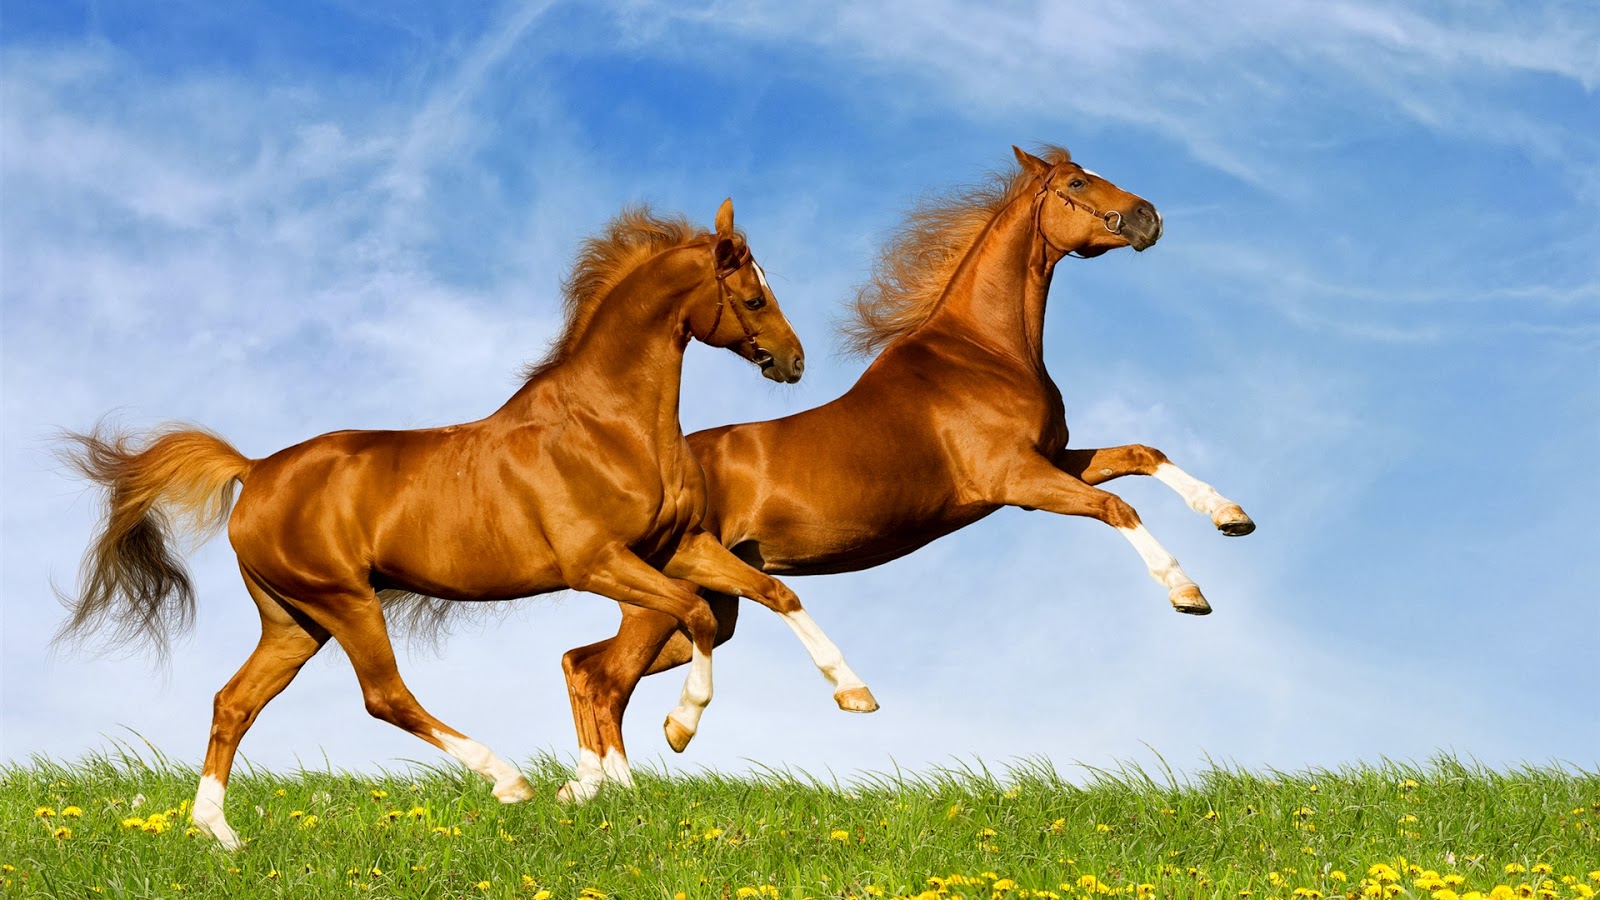 HD Wallpaper Desktop Horse In High Resolution For